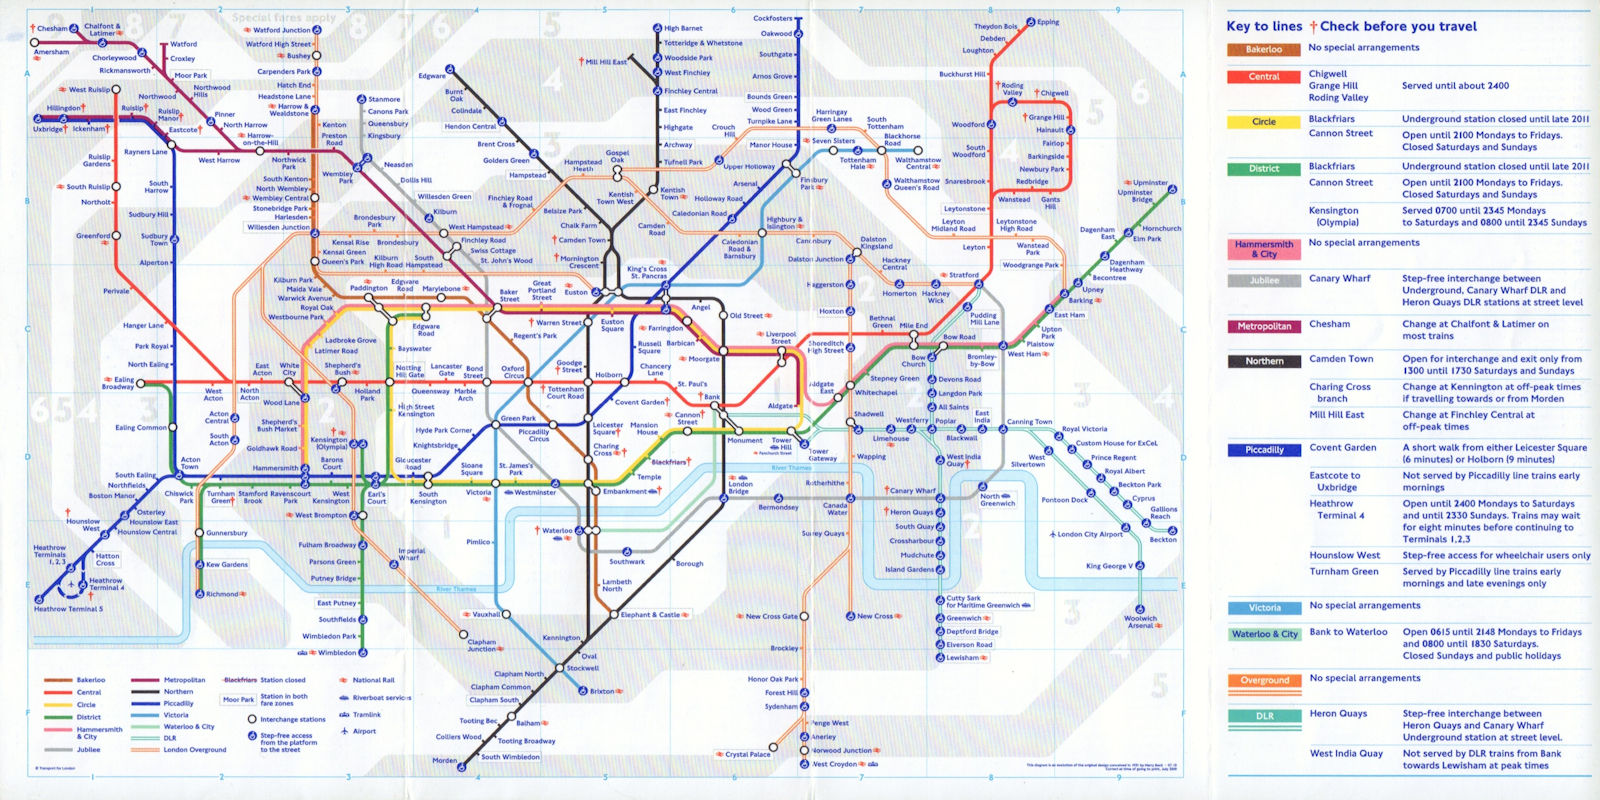 LONDON UNDERGROUND tube map. Overground East London Line Extension phase 1 2010